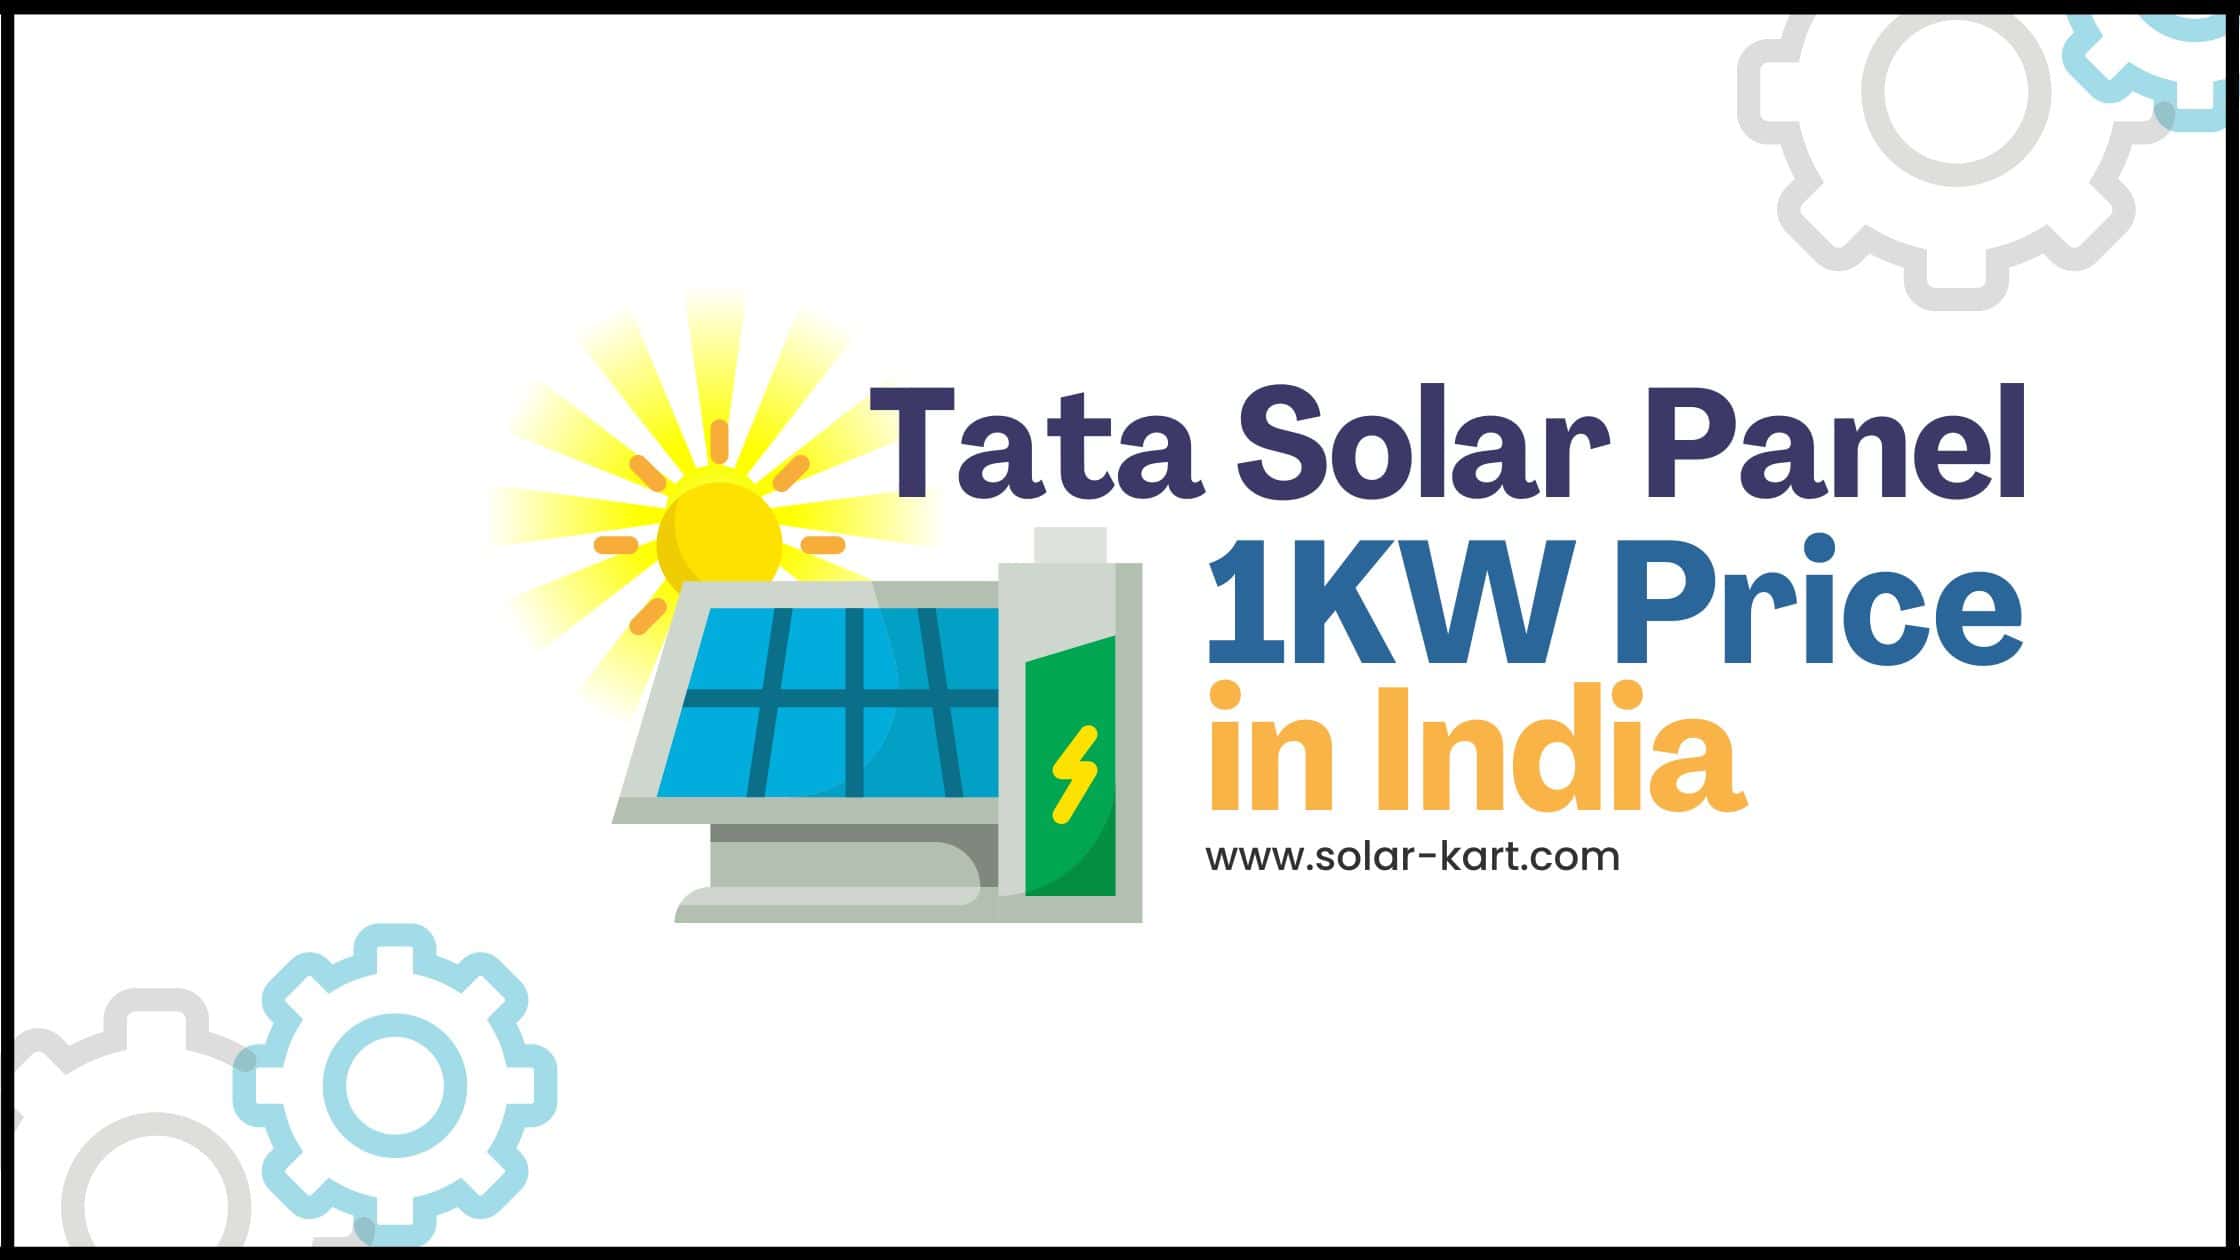 Tata Solar Panel 1kW Price in India